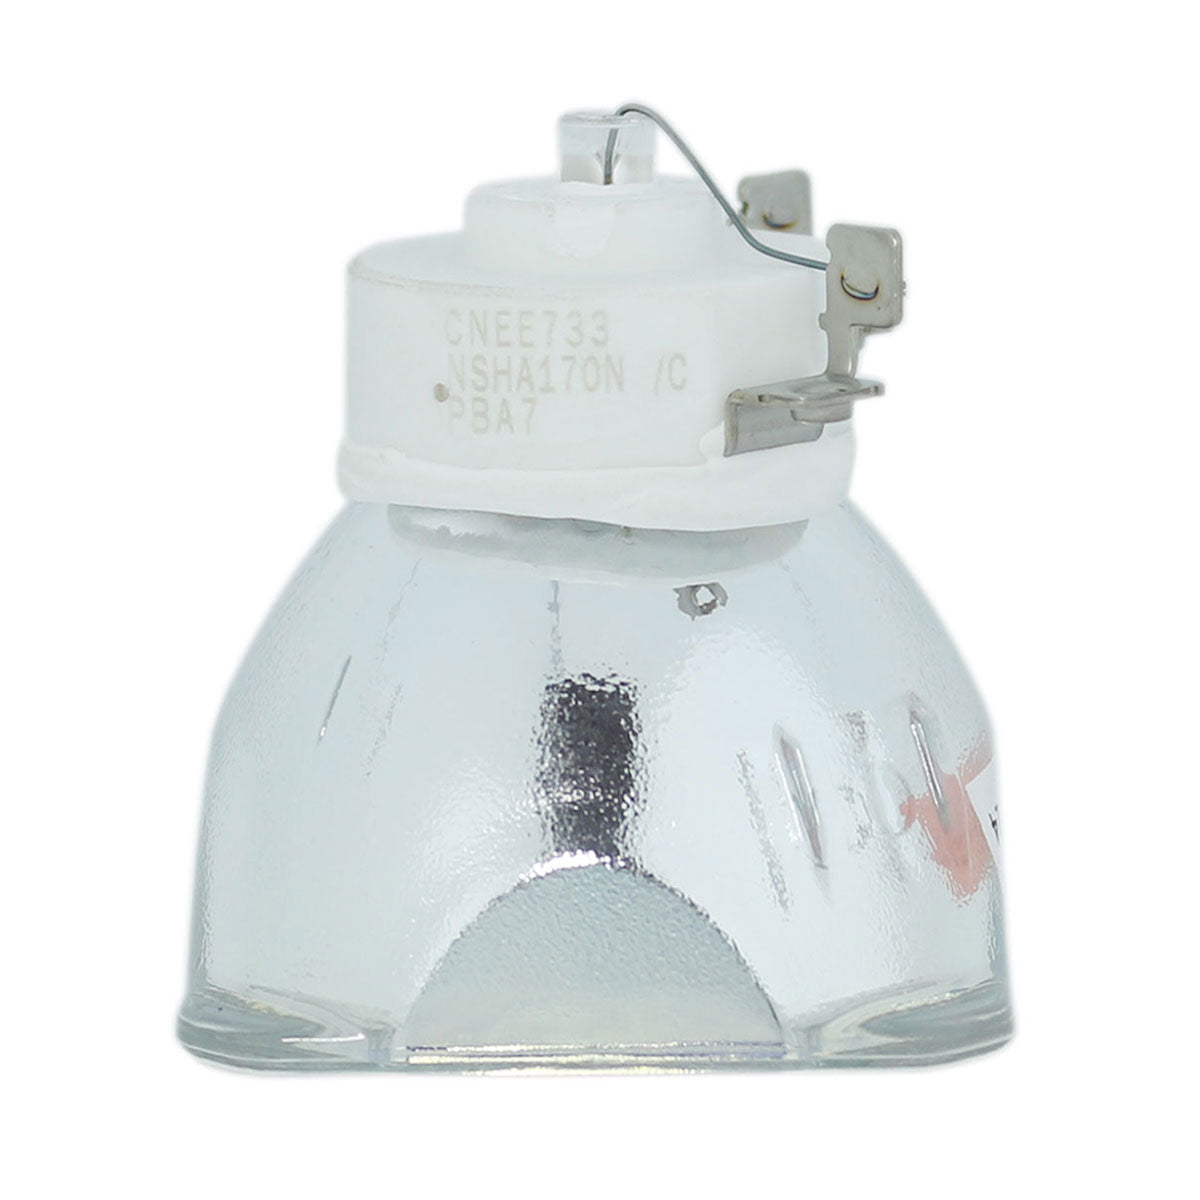 Hitachi DT01091 Ushio Projector Bare Lamp